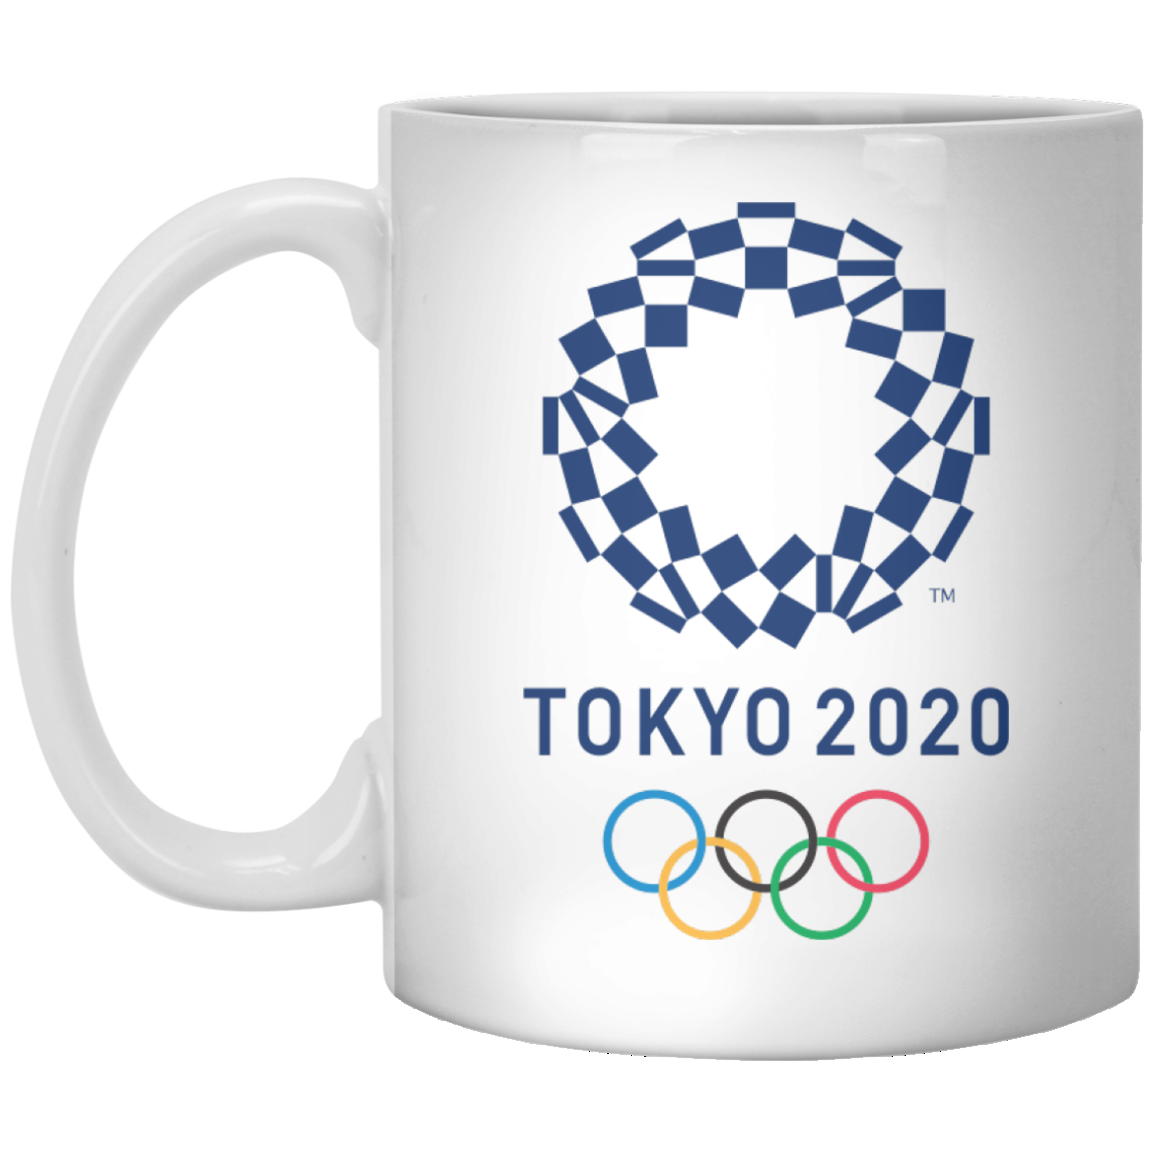 Tokyo 2020 Olympic mugs